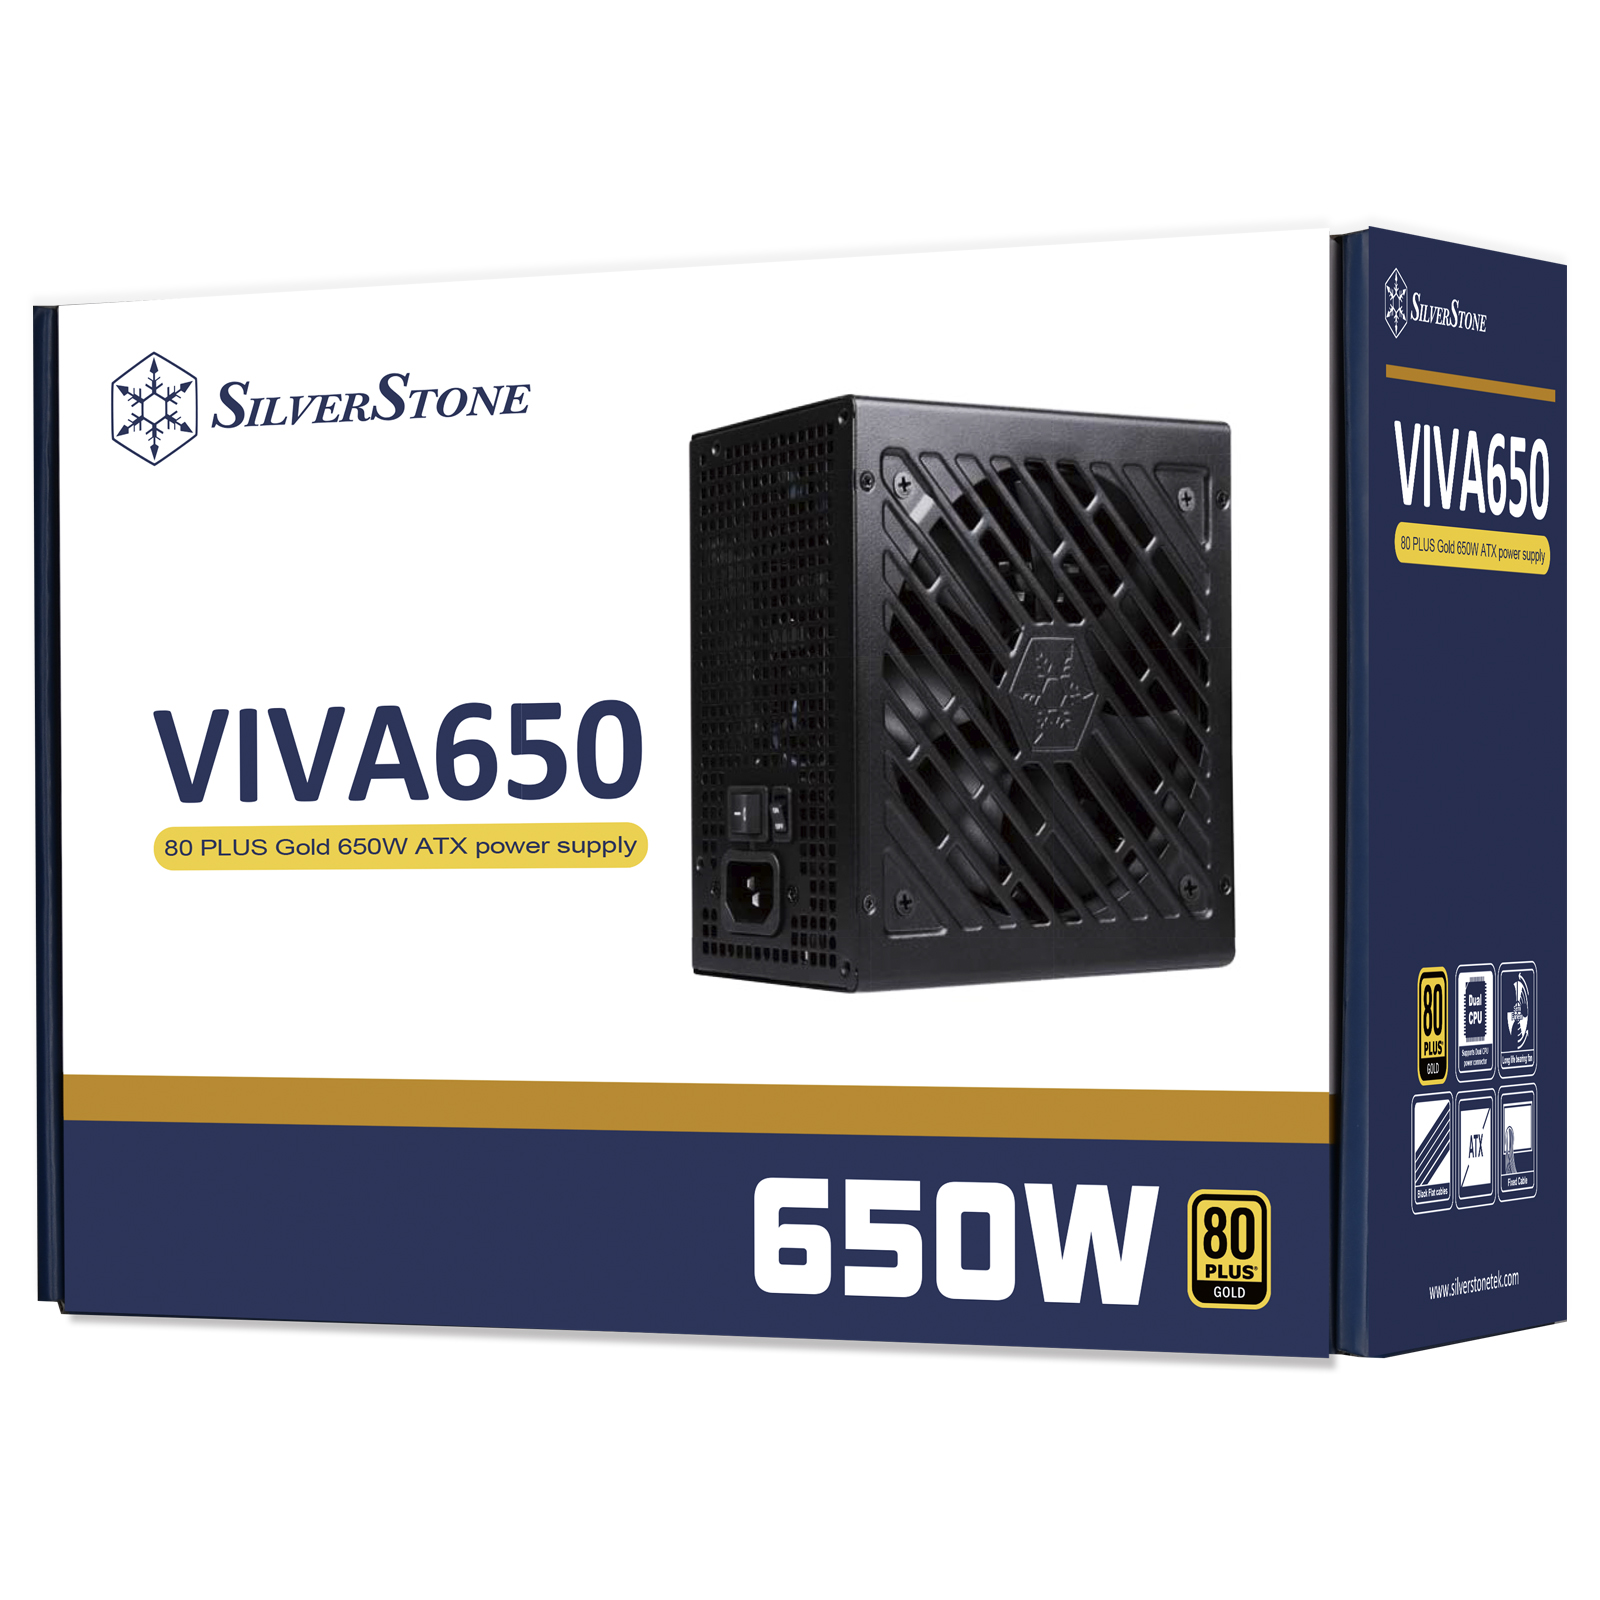 SilverStone VIVA 650 Gold 80 PLUS Gold 650W ATX power supply